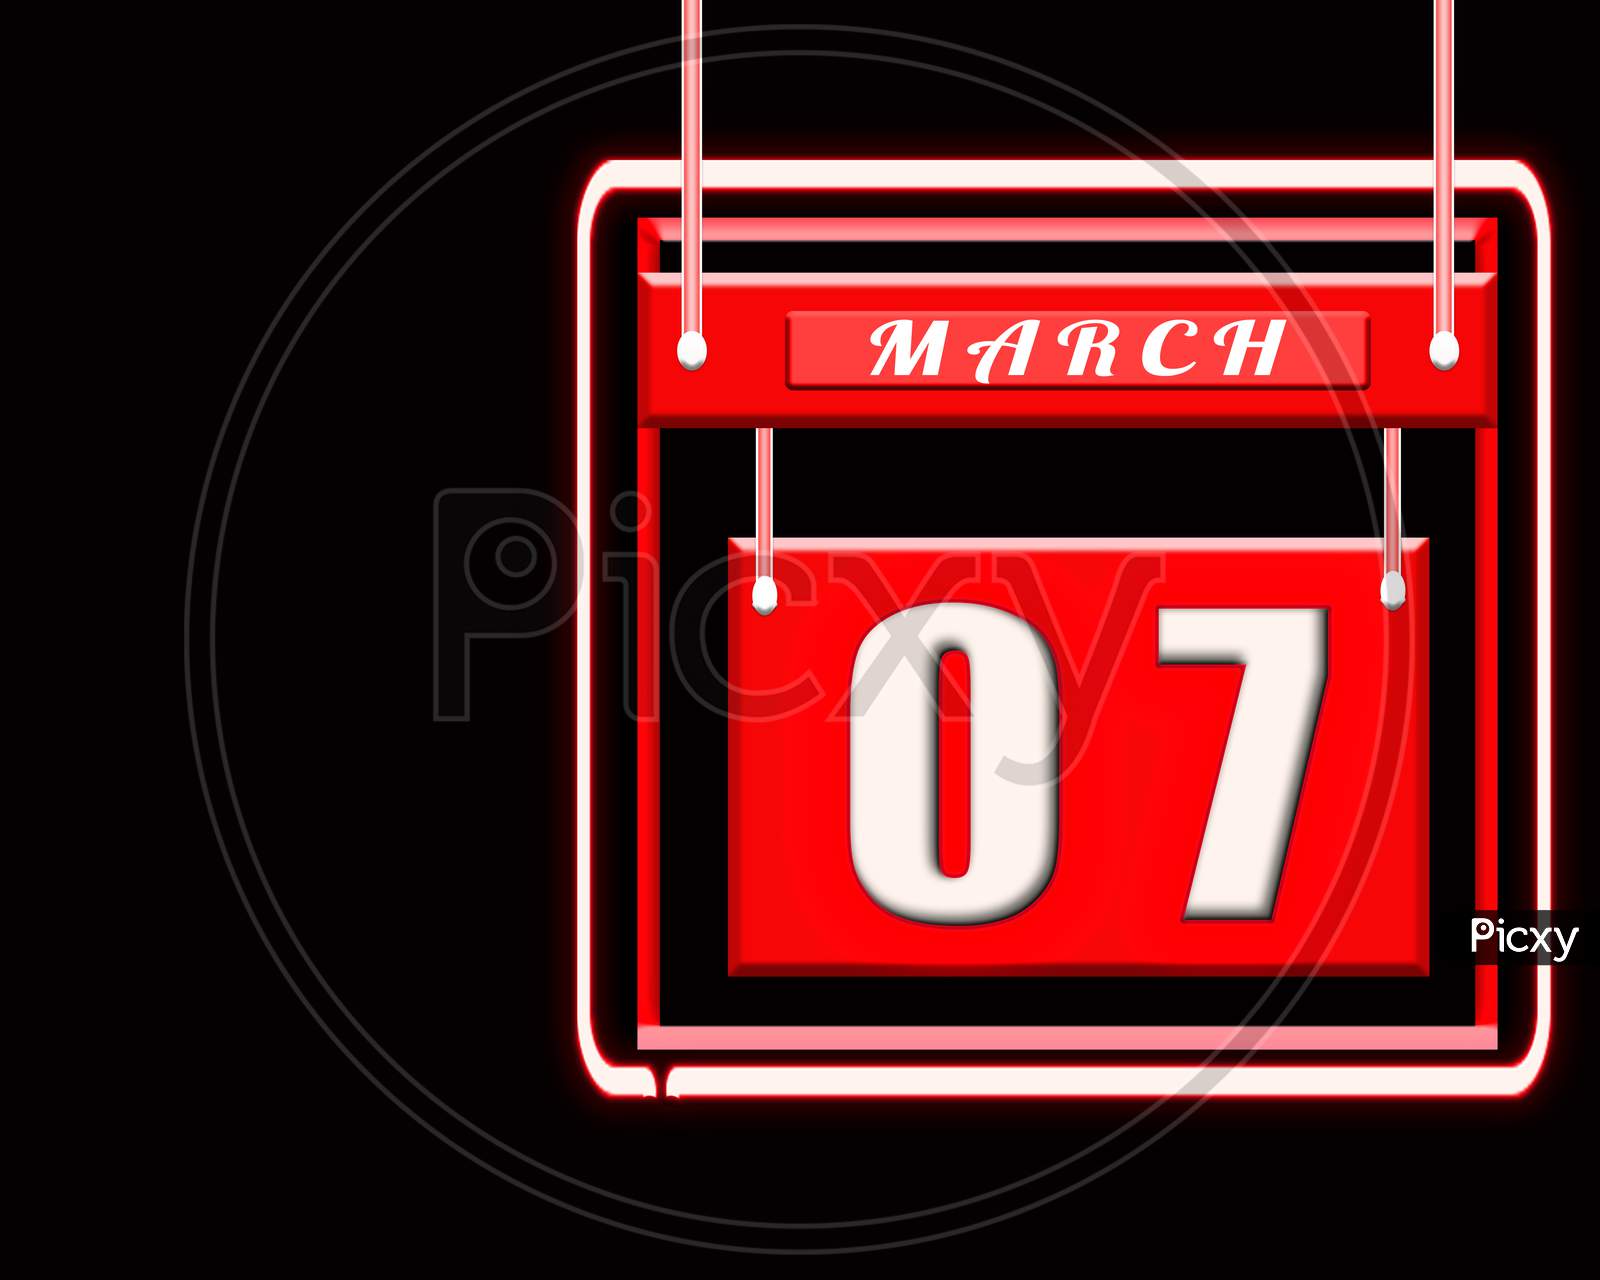 7 March, Red Calendar On Black Backgrand